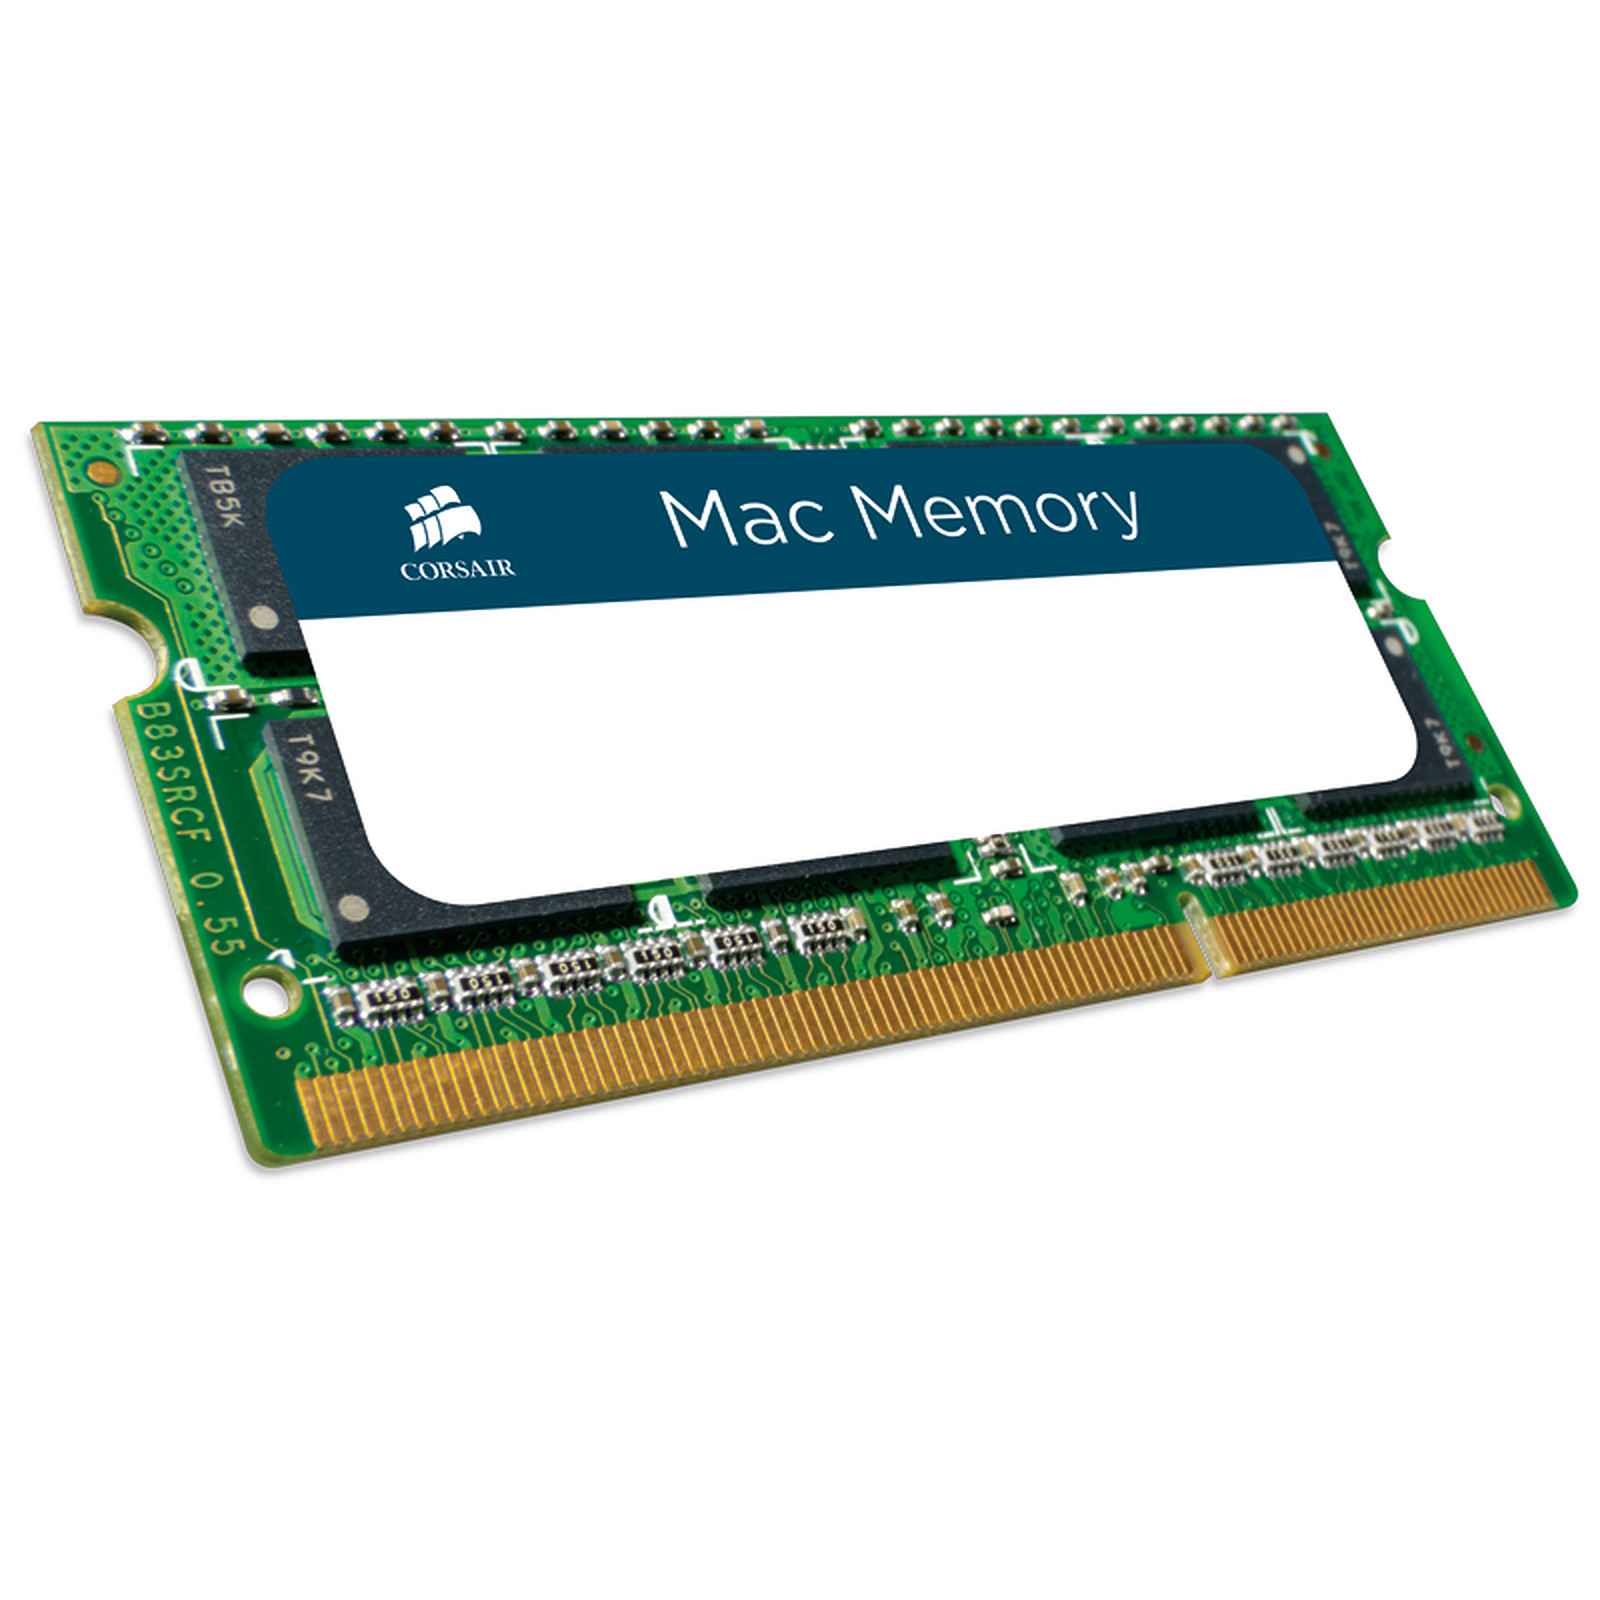 Corsair Mac Memory SO-DIMM 8 Go DDR3 1333 MHz CL9 · Occasion - Memoire PC Corsair - Occasion